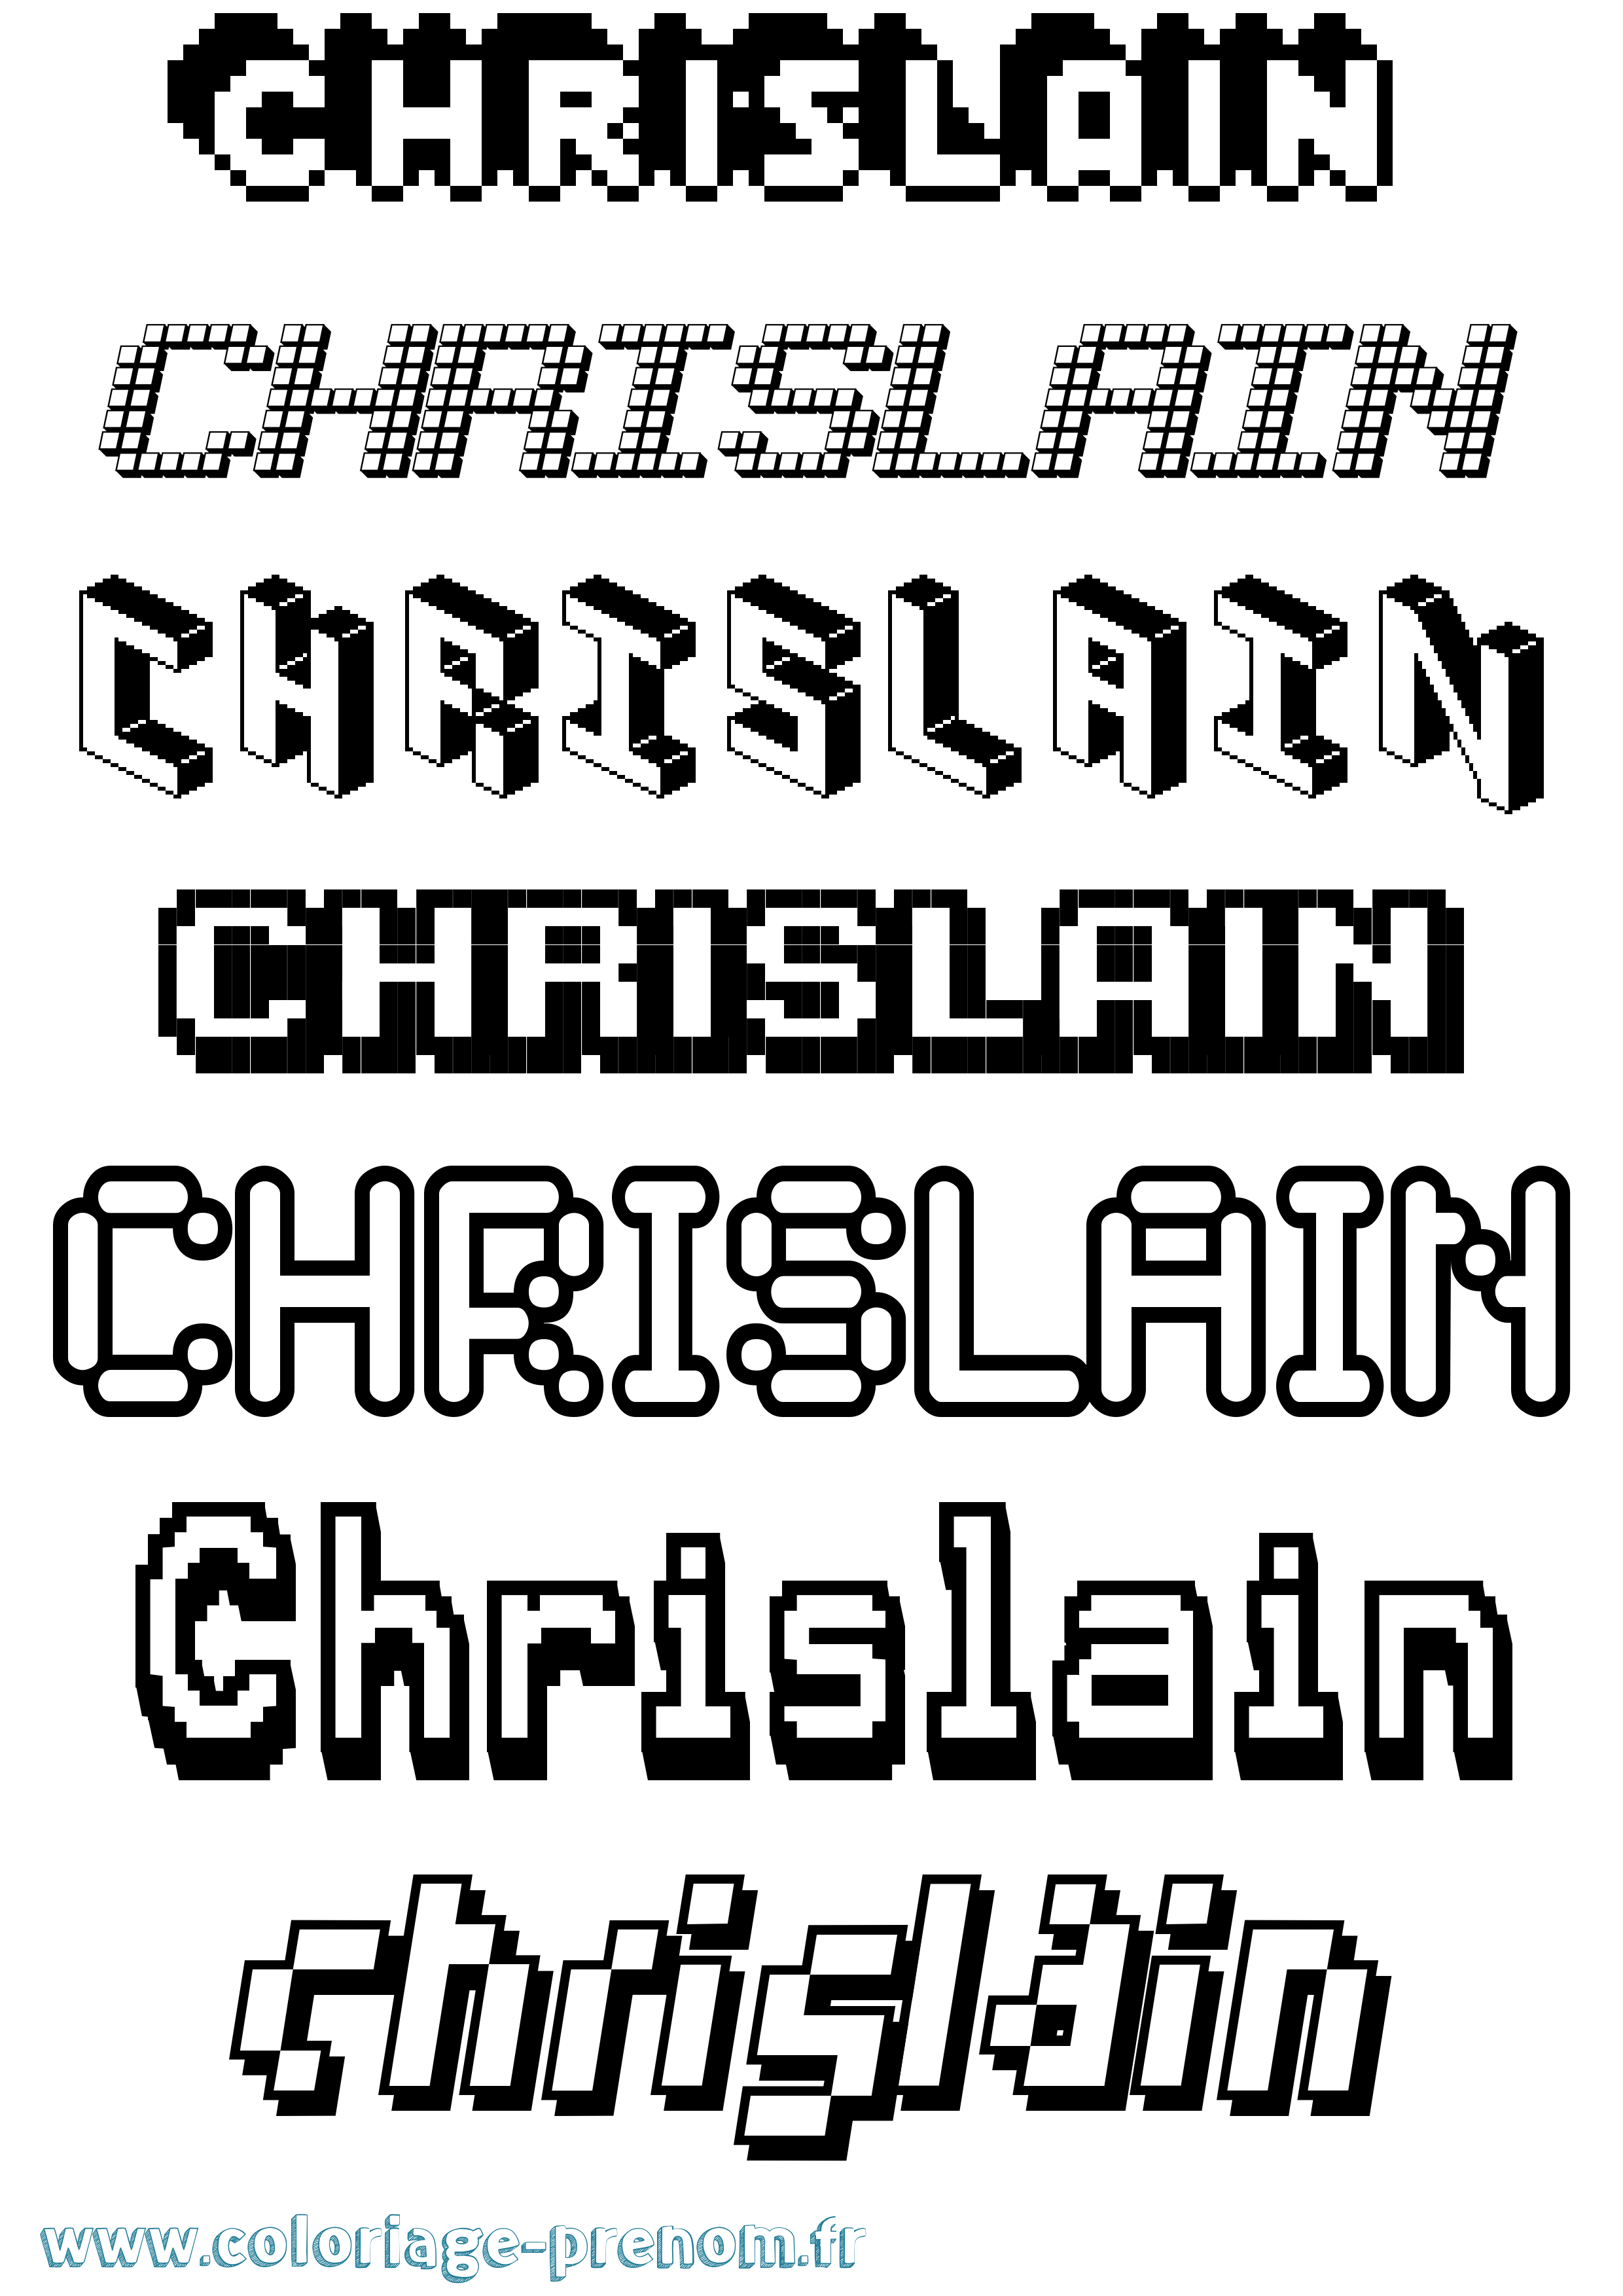 Coloriage prénom Chrislain Pixel